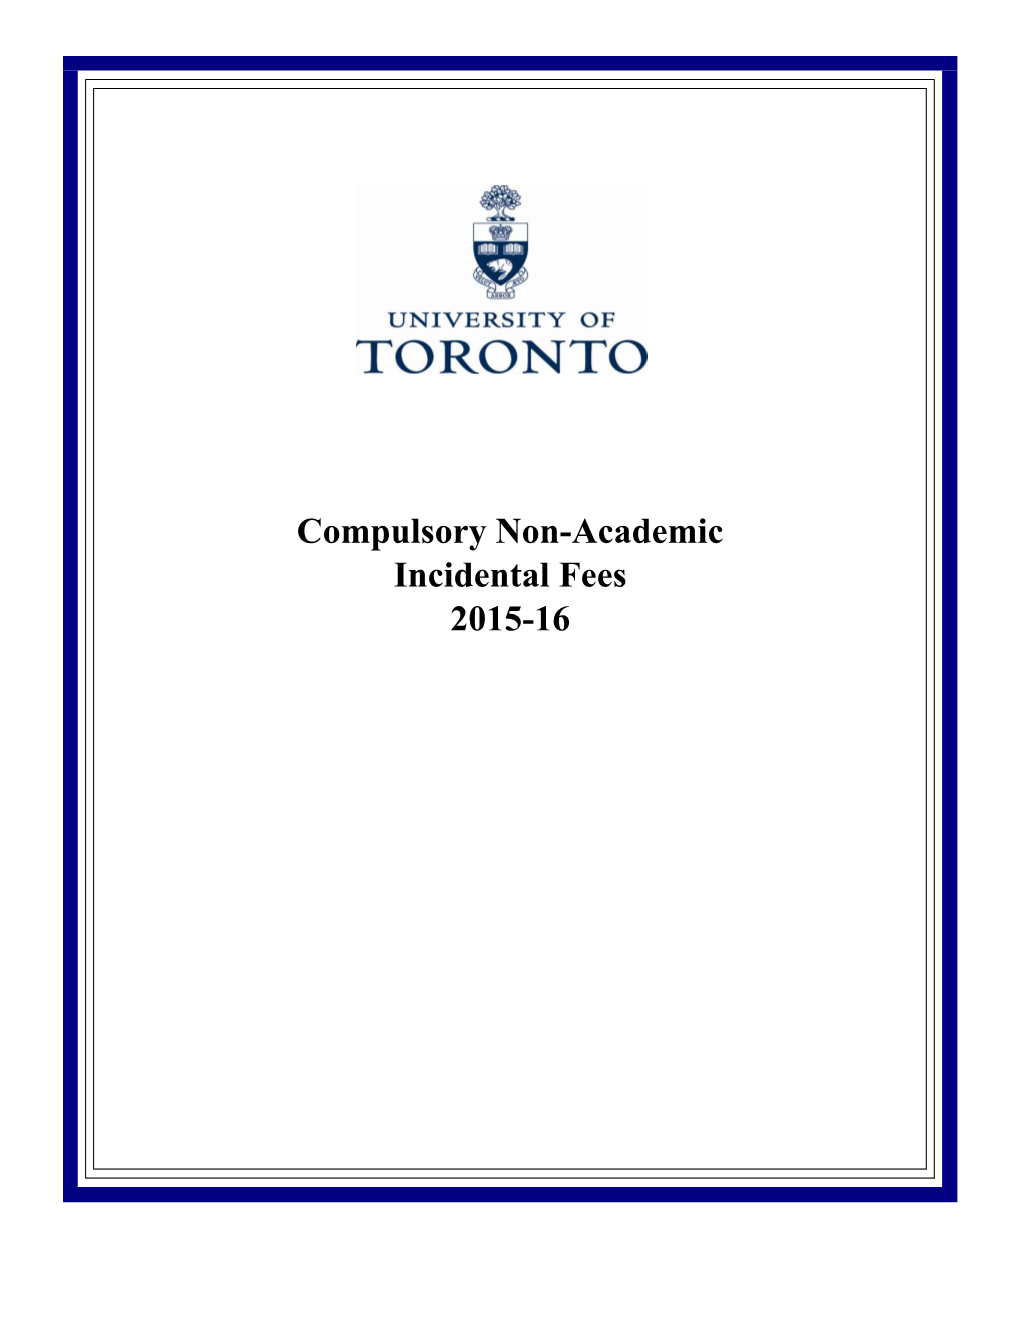 2015-16 Compulsory Non-Academic Incidental Fees Report